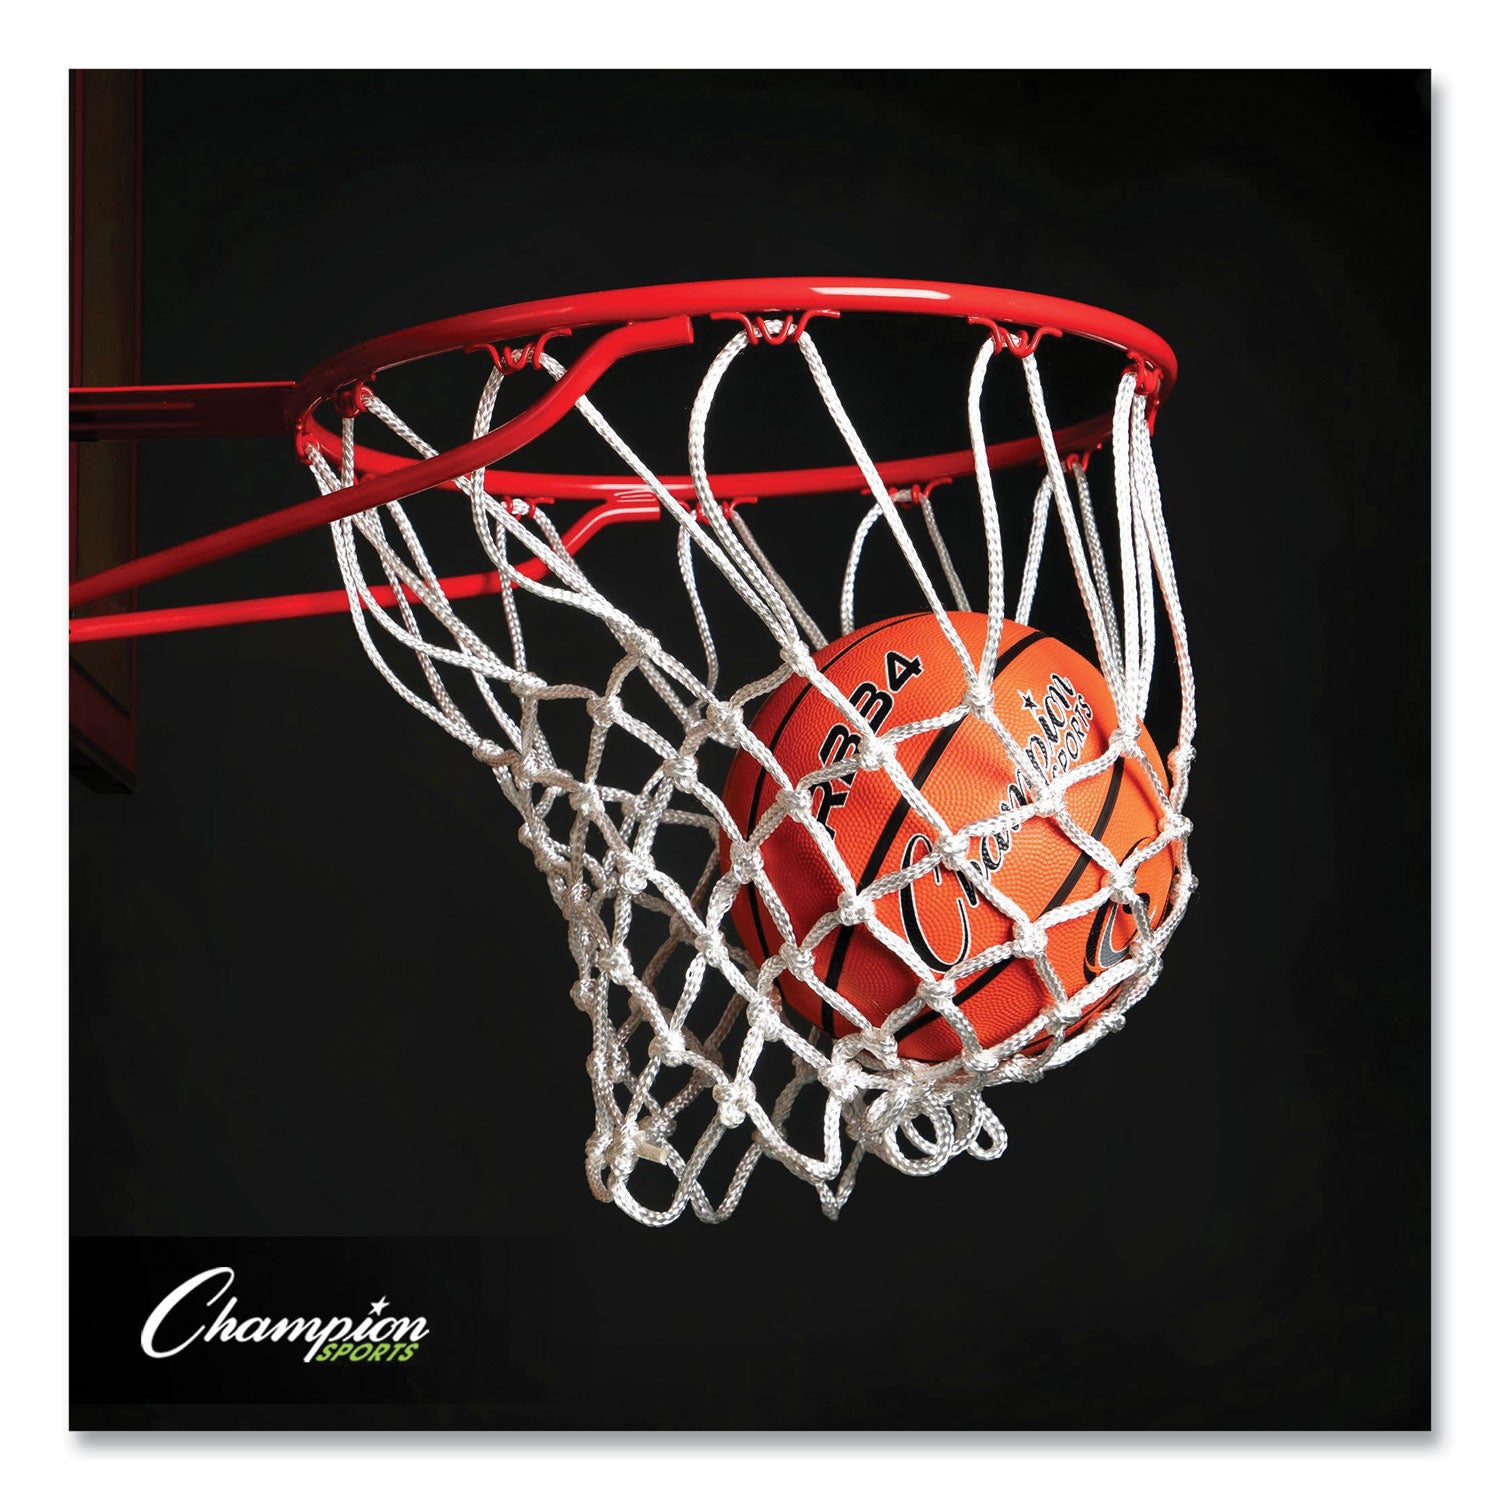 Rubber Sports Ball, For Basketball, No. 6, Intermediate Size, Orange - 